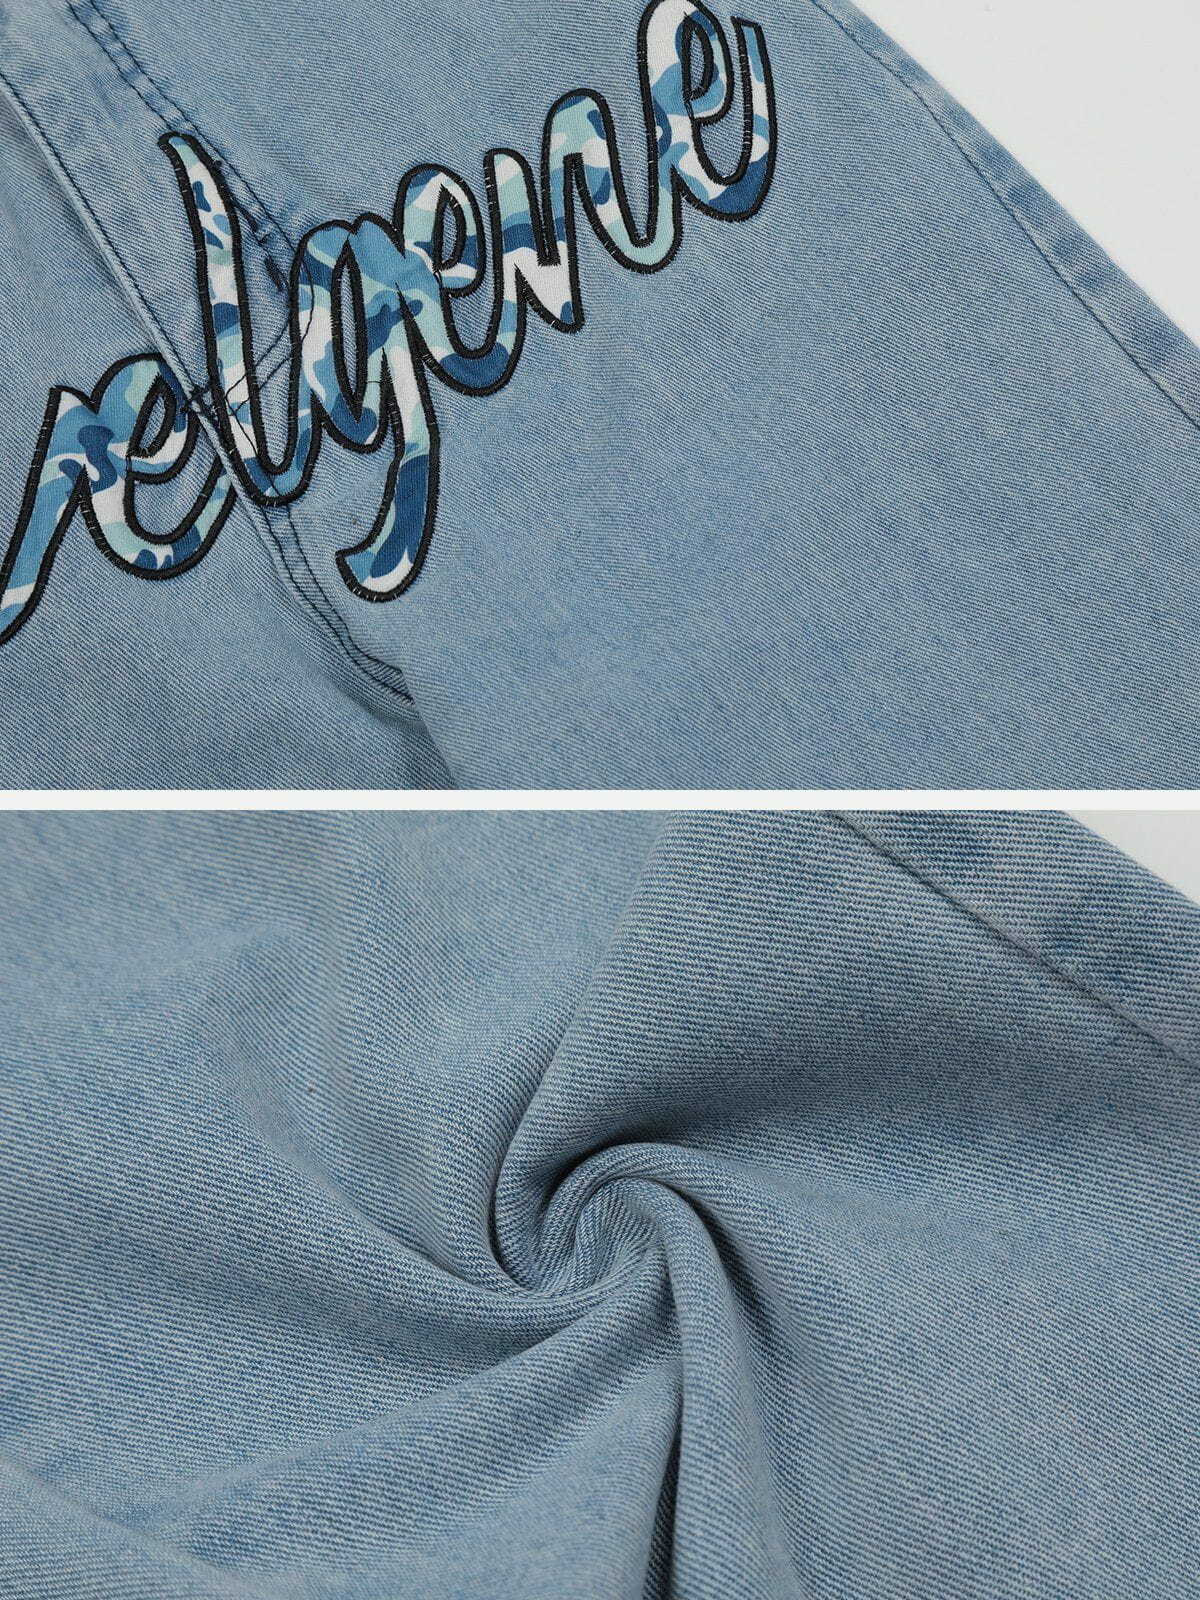 camo print elastic jeans edgy & versatile streetwear 6391